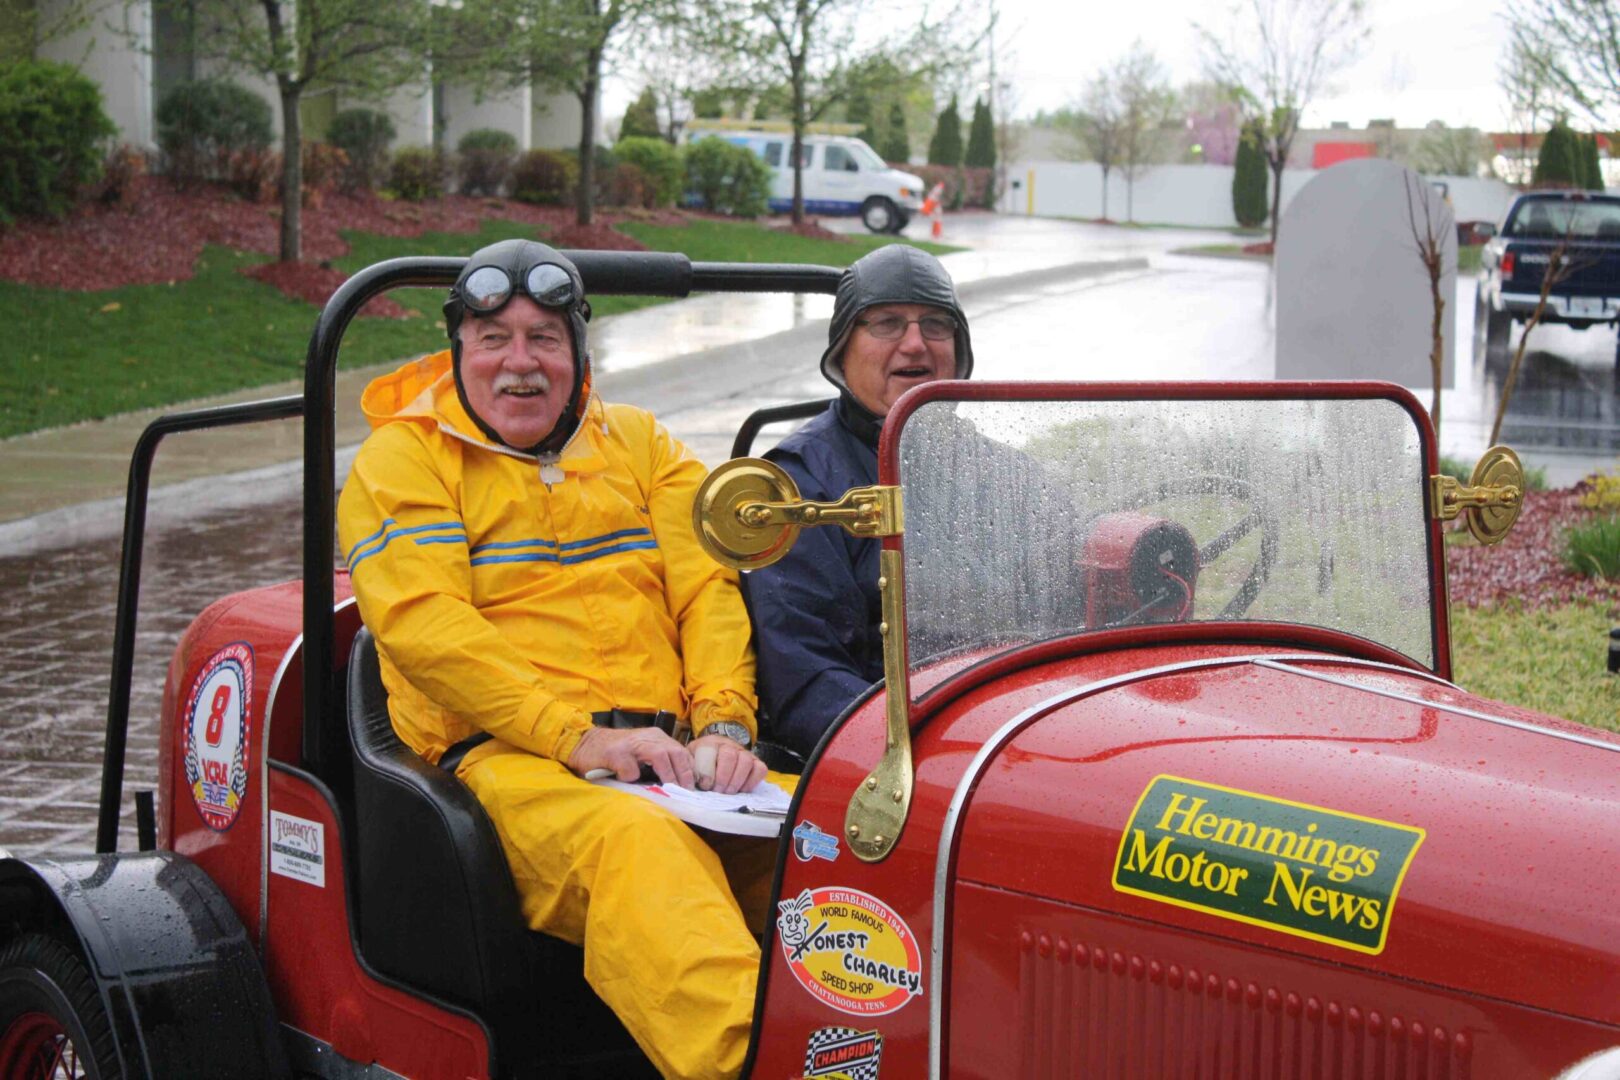 two elderly men riding a vintage car while raining